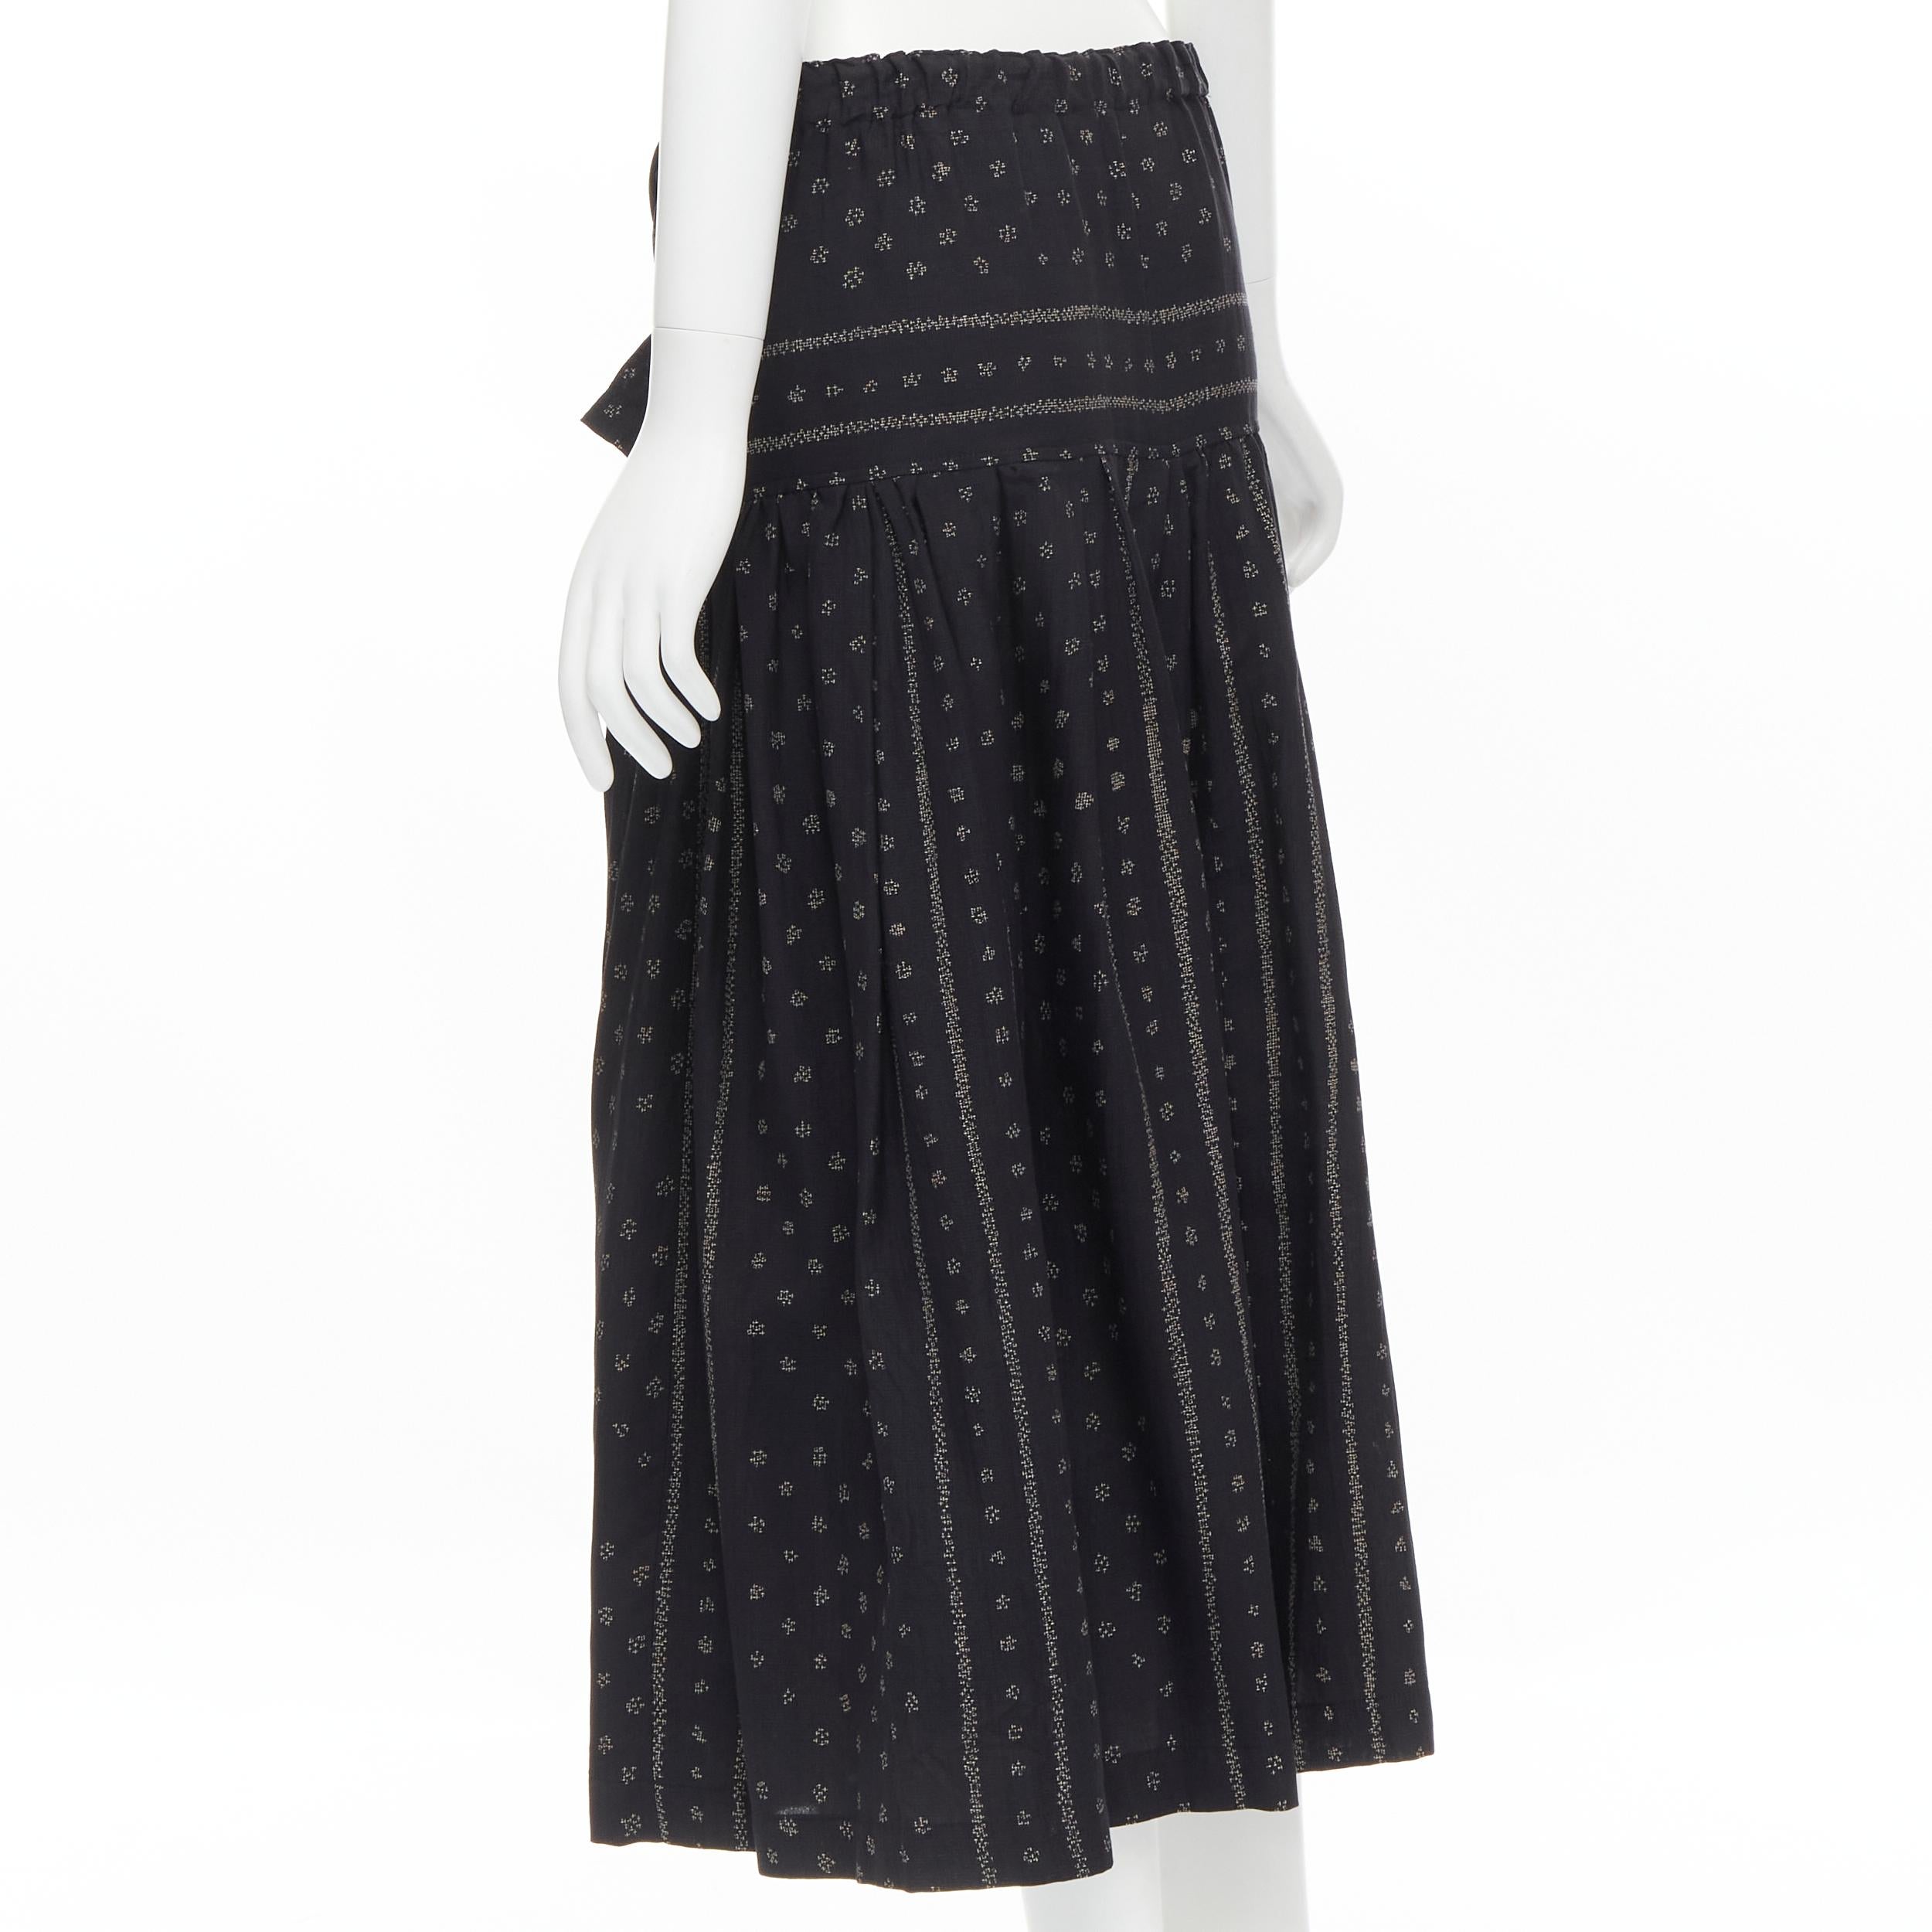 TRICOT COMME DES GARCONS black Ethnic Bohemian floral jacquard flared skirt S For Sale 1